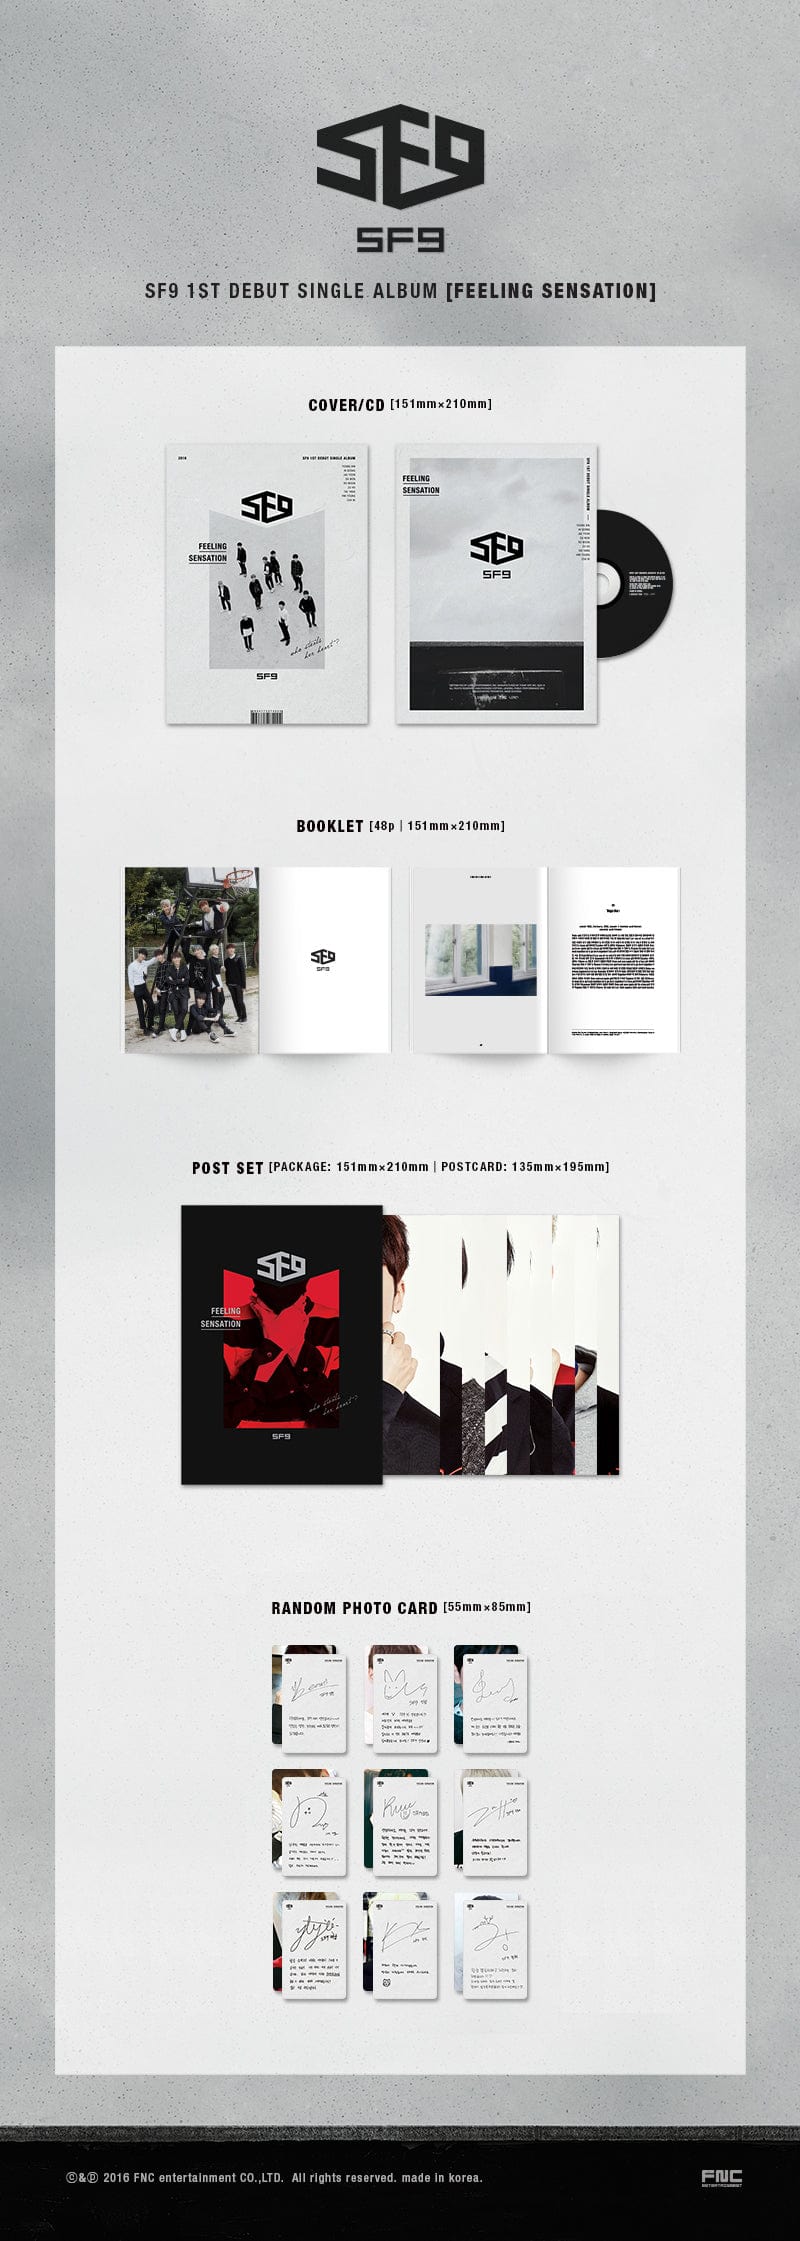 Korea Pop Store SF9 - FEELING SENSATION (1ST DEBUT SINGLE ALBUM) Kawaii Gifts 8804775074004